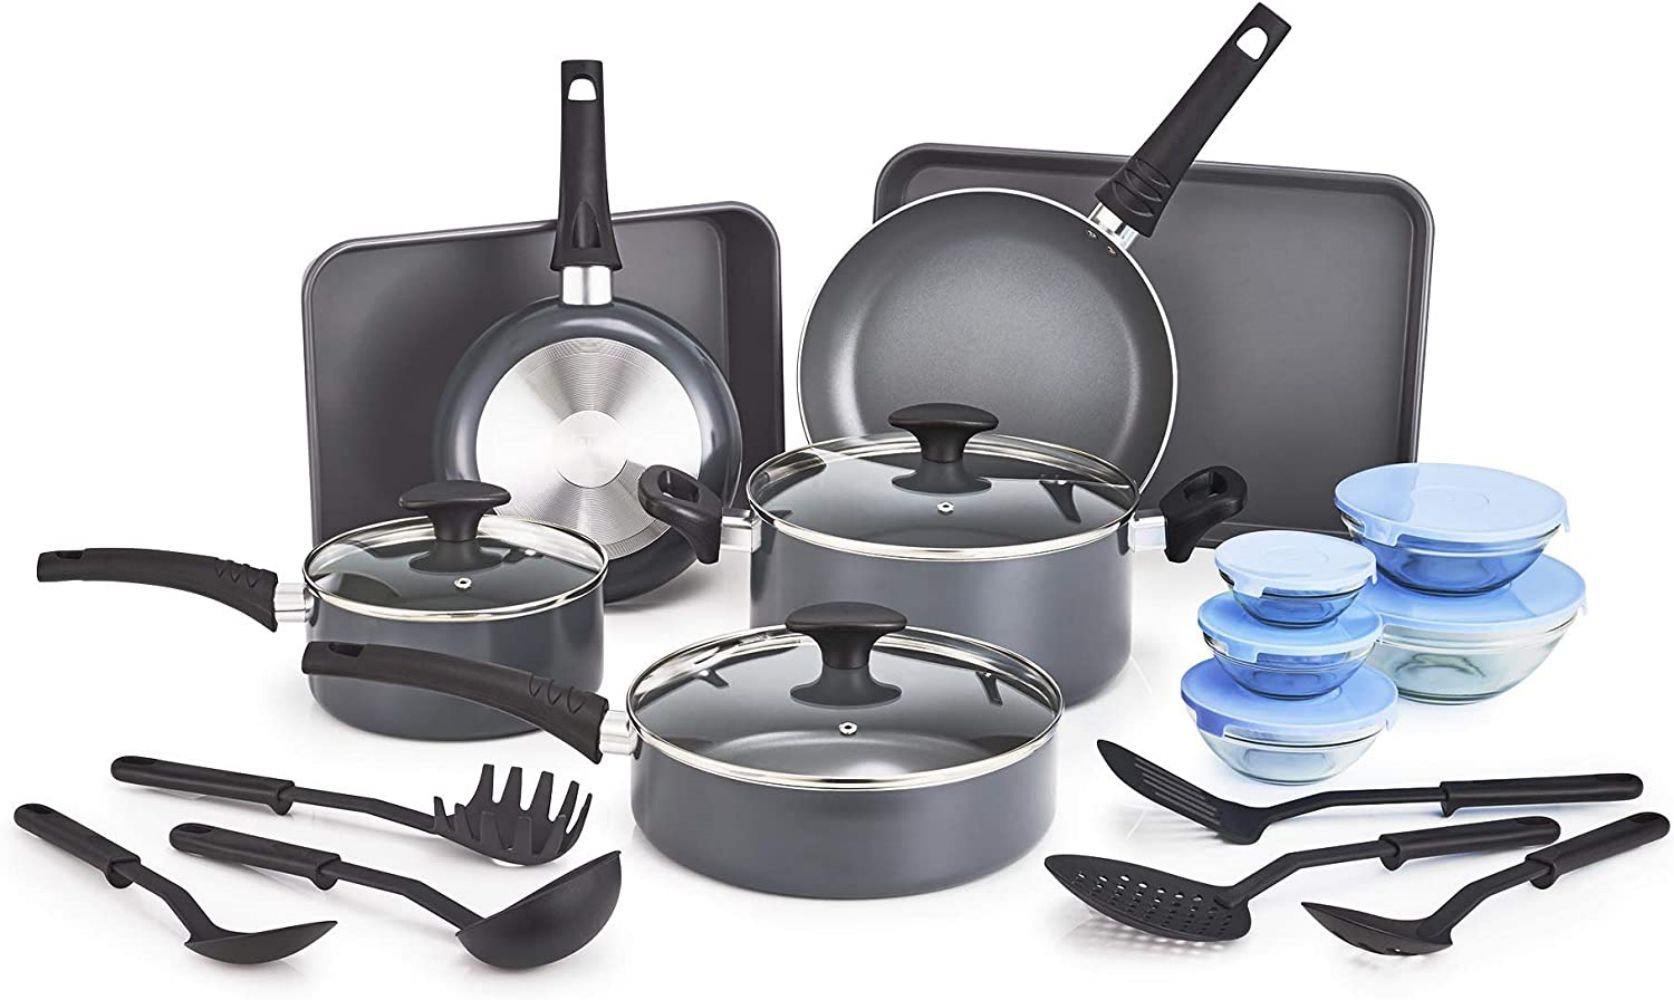 Basics Non-Stick Cookware Set, Pots, Pans and Utensils - 15-Piece  Set & 18-Piece Kitchen Dinnerware Set, Dishes, Bowls, Service for 6, White